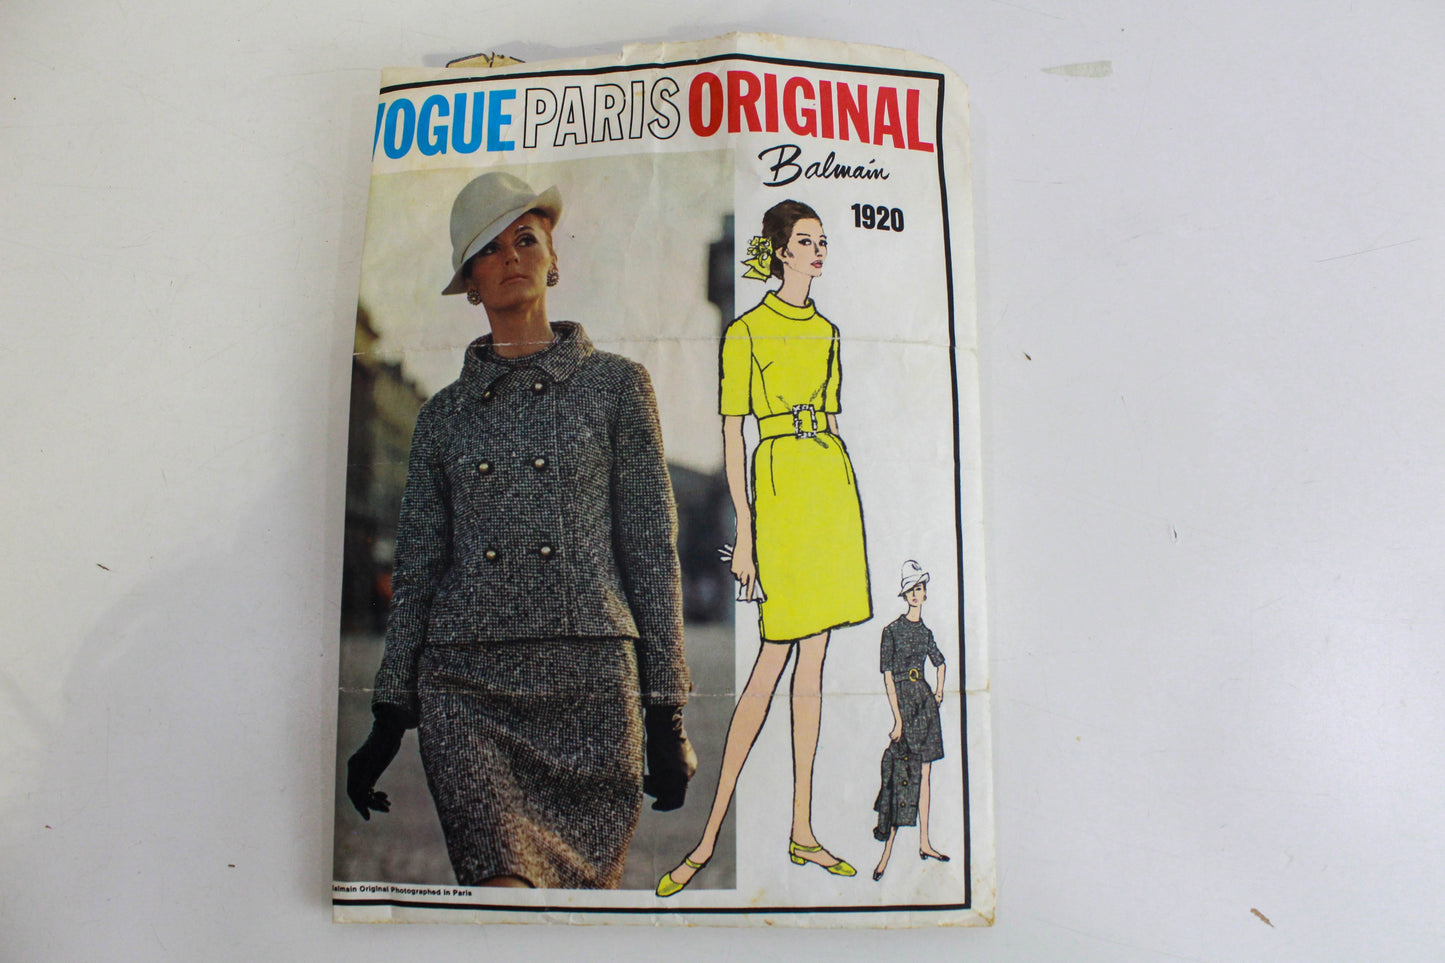 vogue paris original balmain sewing pattern 1920 dress and jacket 